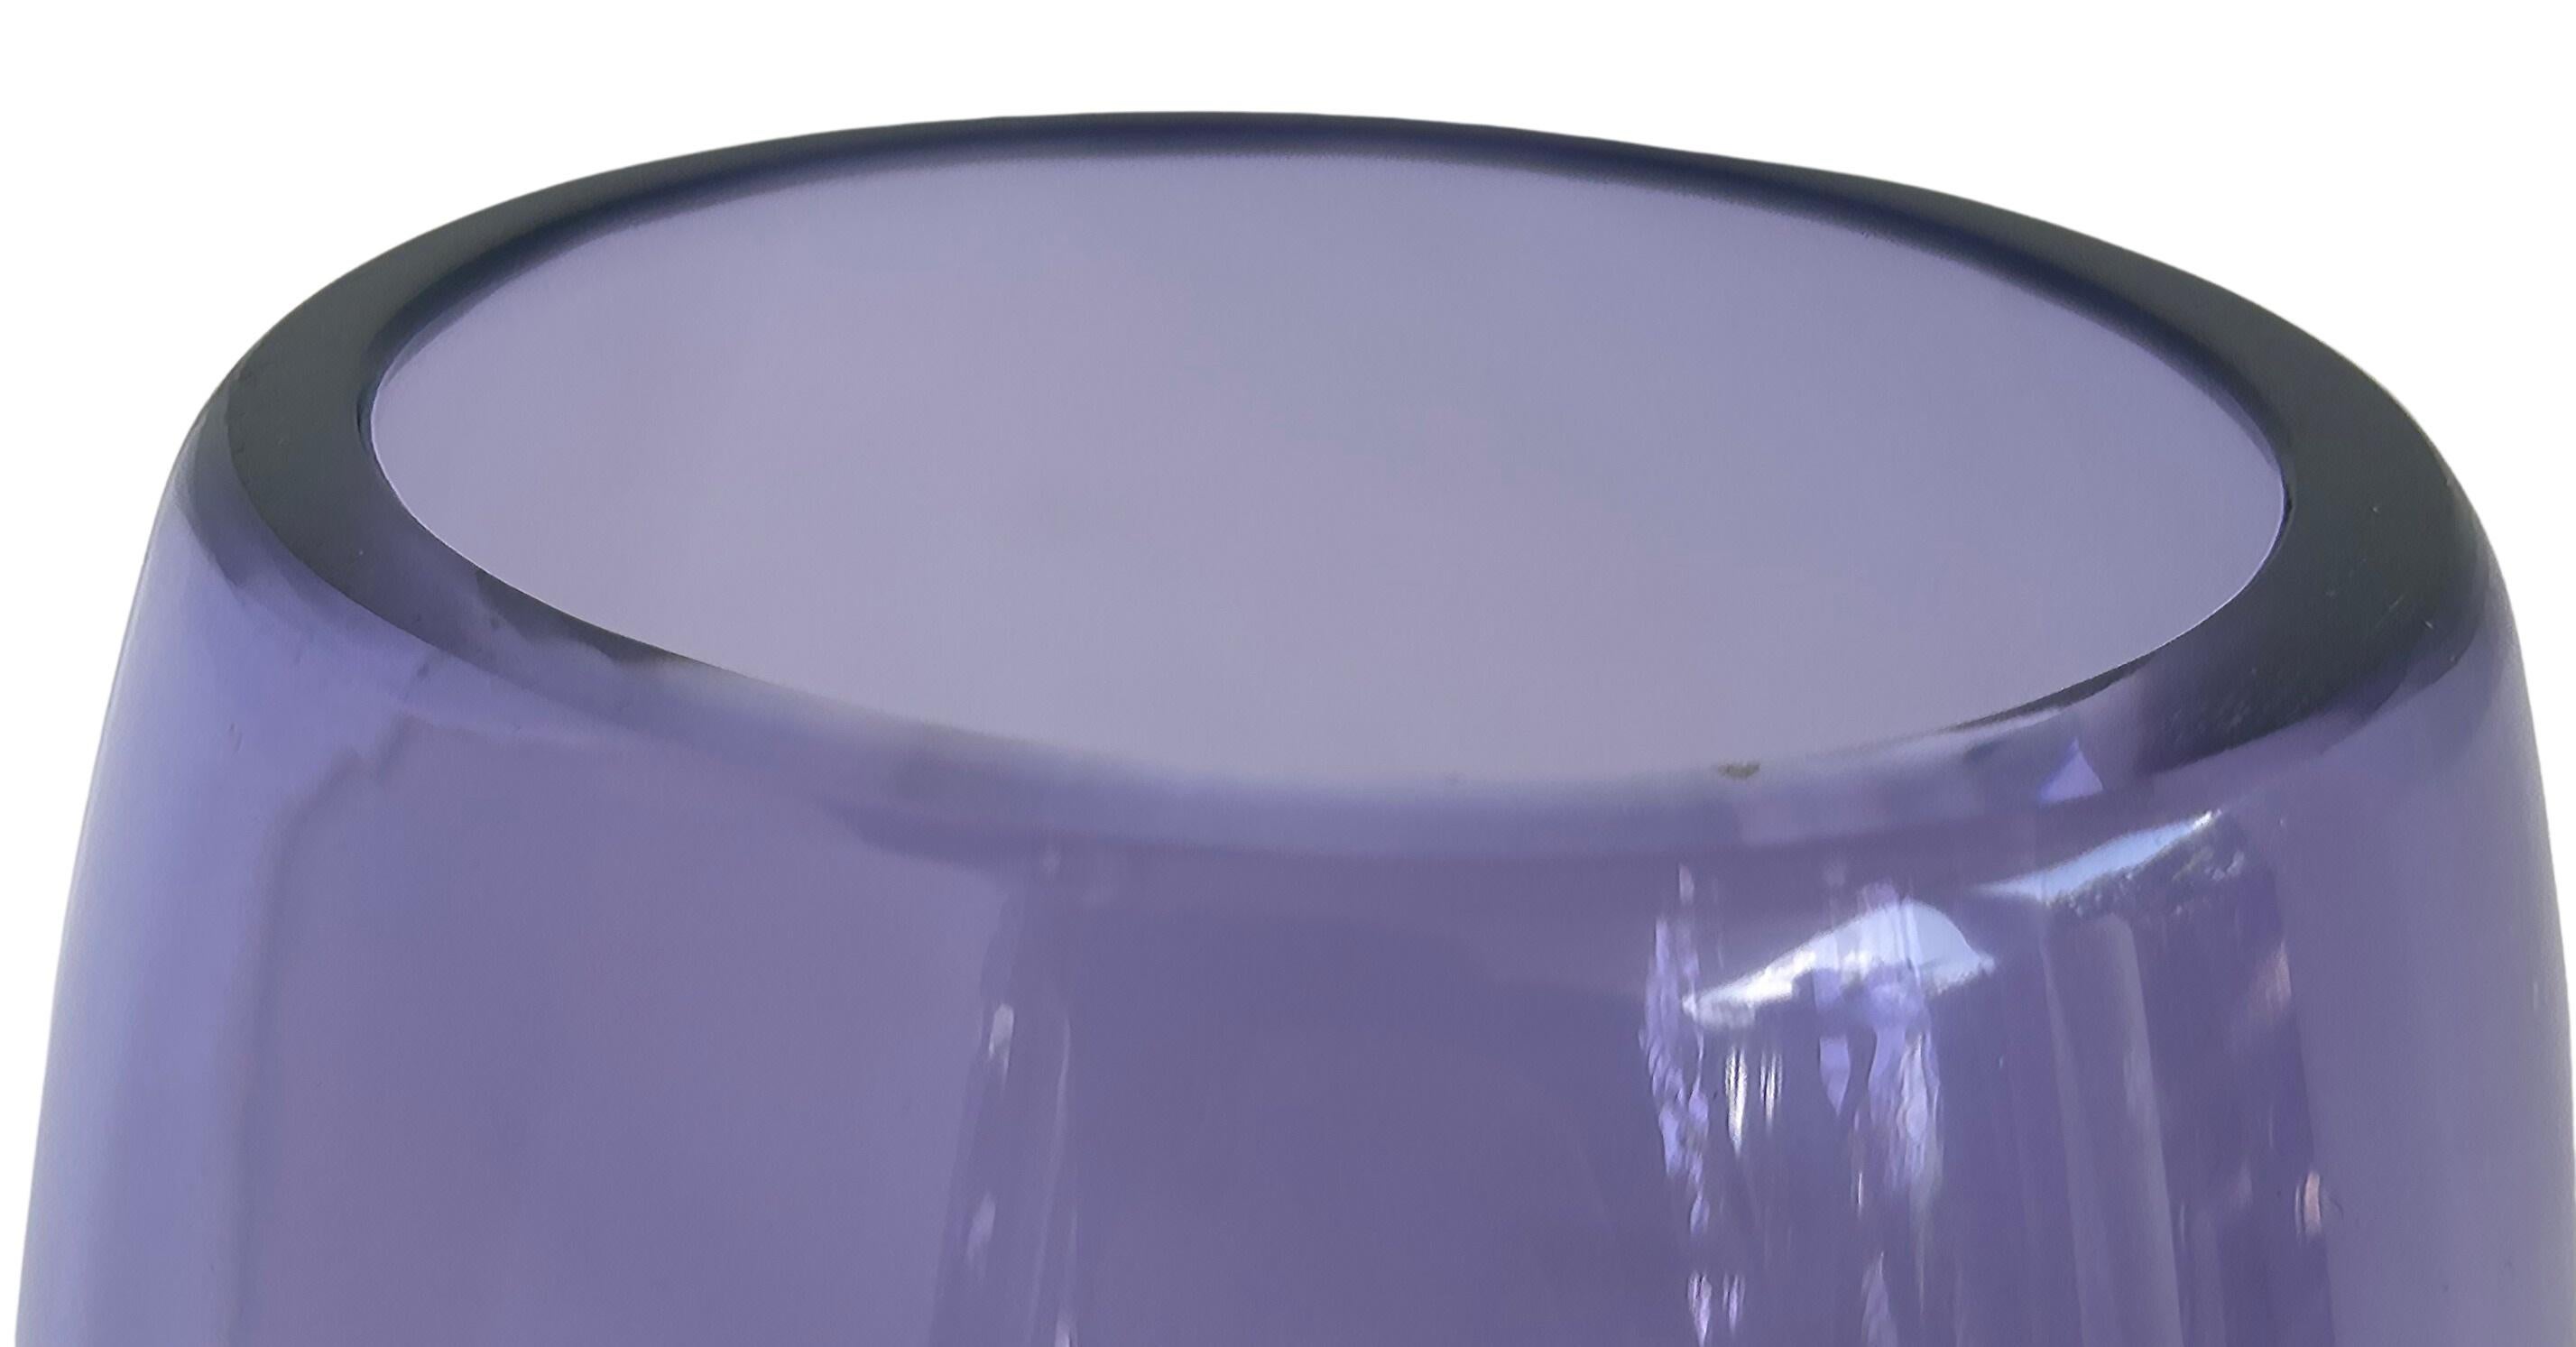 Fendi Casa Hand-blown Vetri Glass Artístico Murano Vases, Amethyst Faceted Cut  For Sale 1